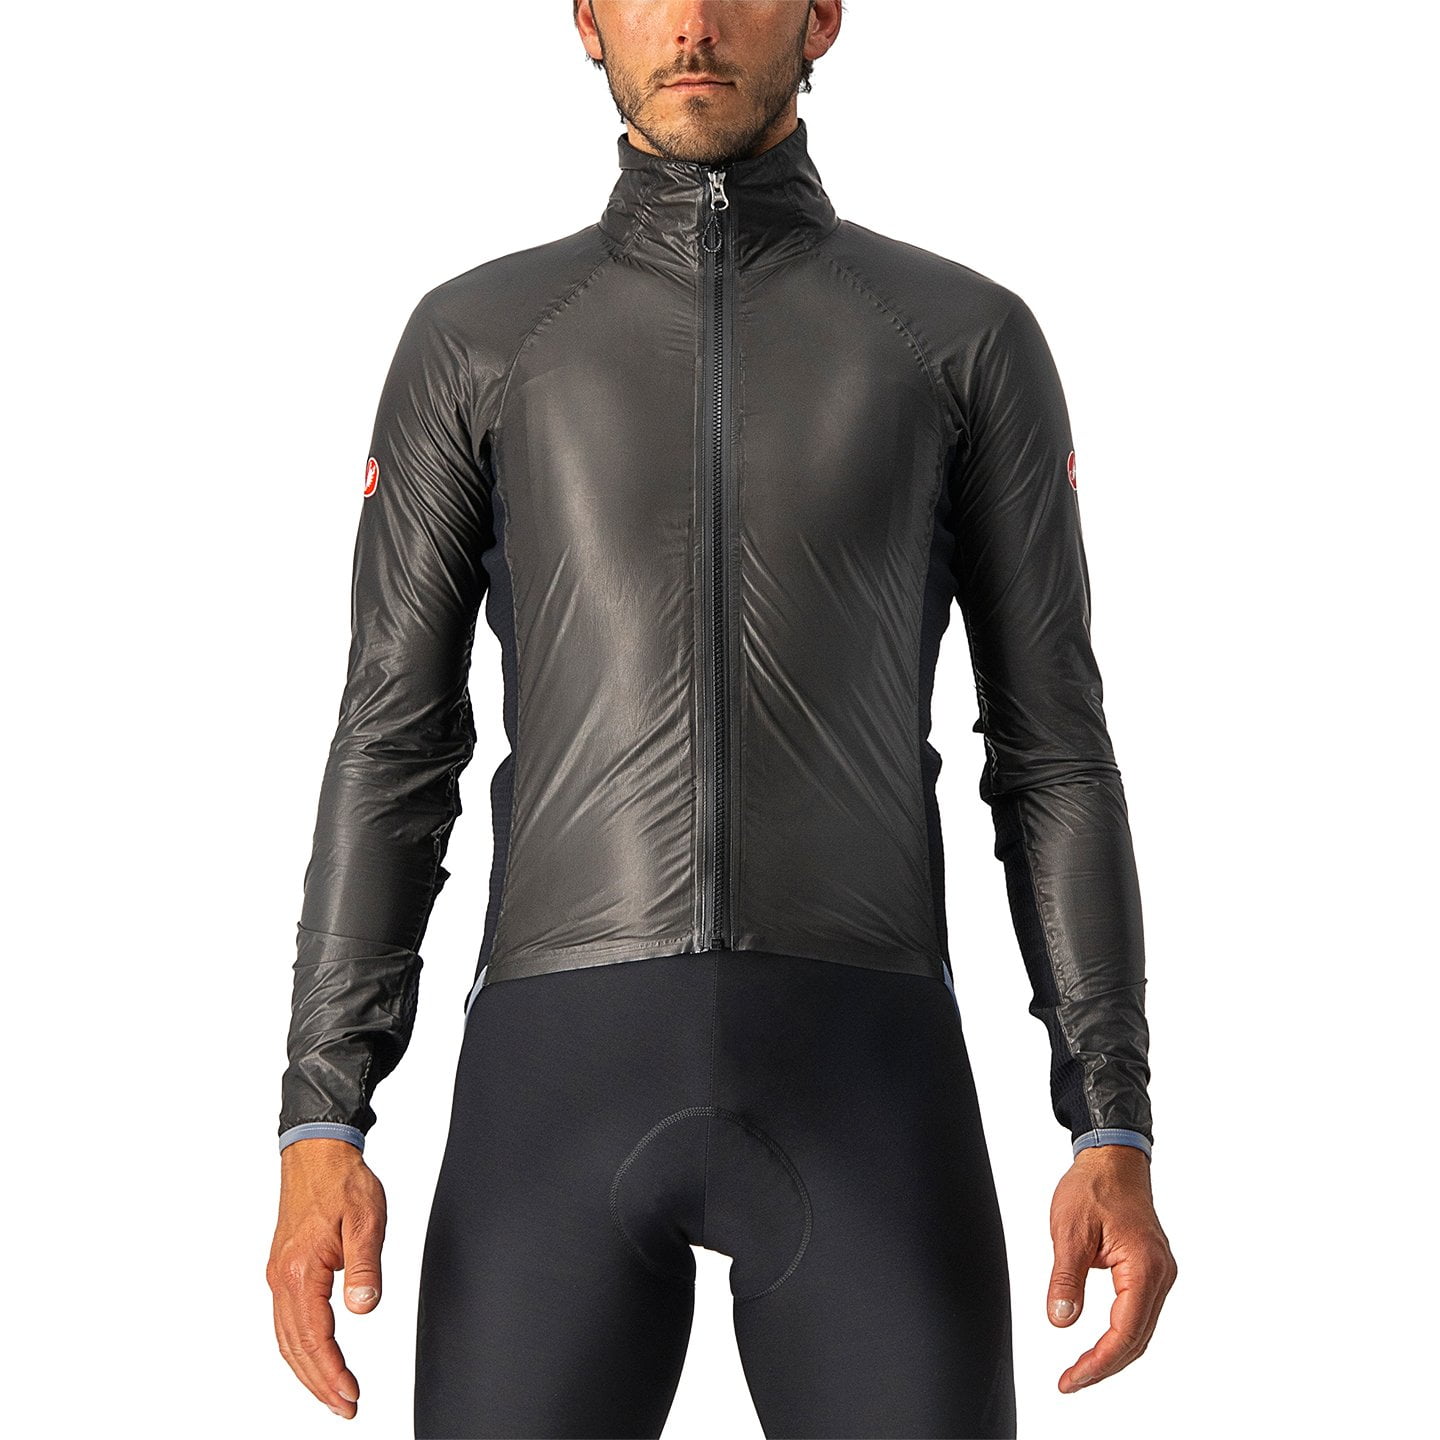 CASTELLI Slicker Pro rain jacket Waterproof Jacket, for men, size 2XL, Cycle jacket, Cycling clothing